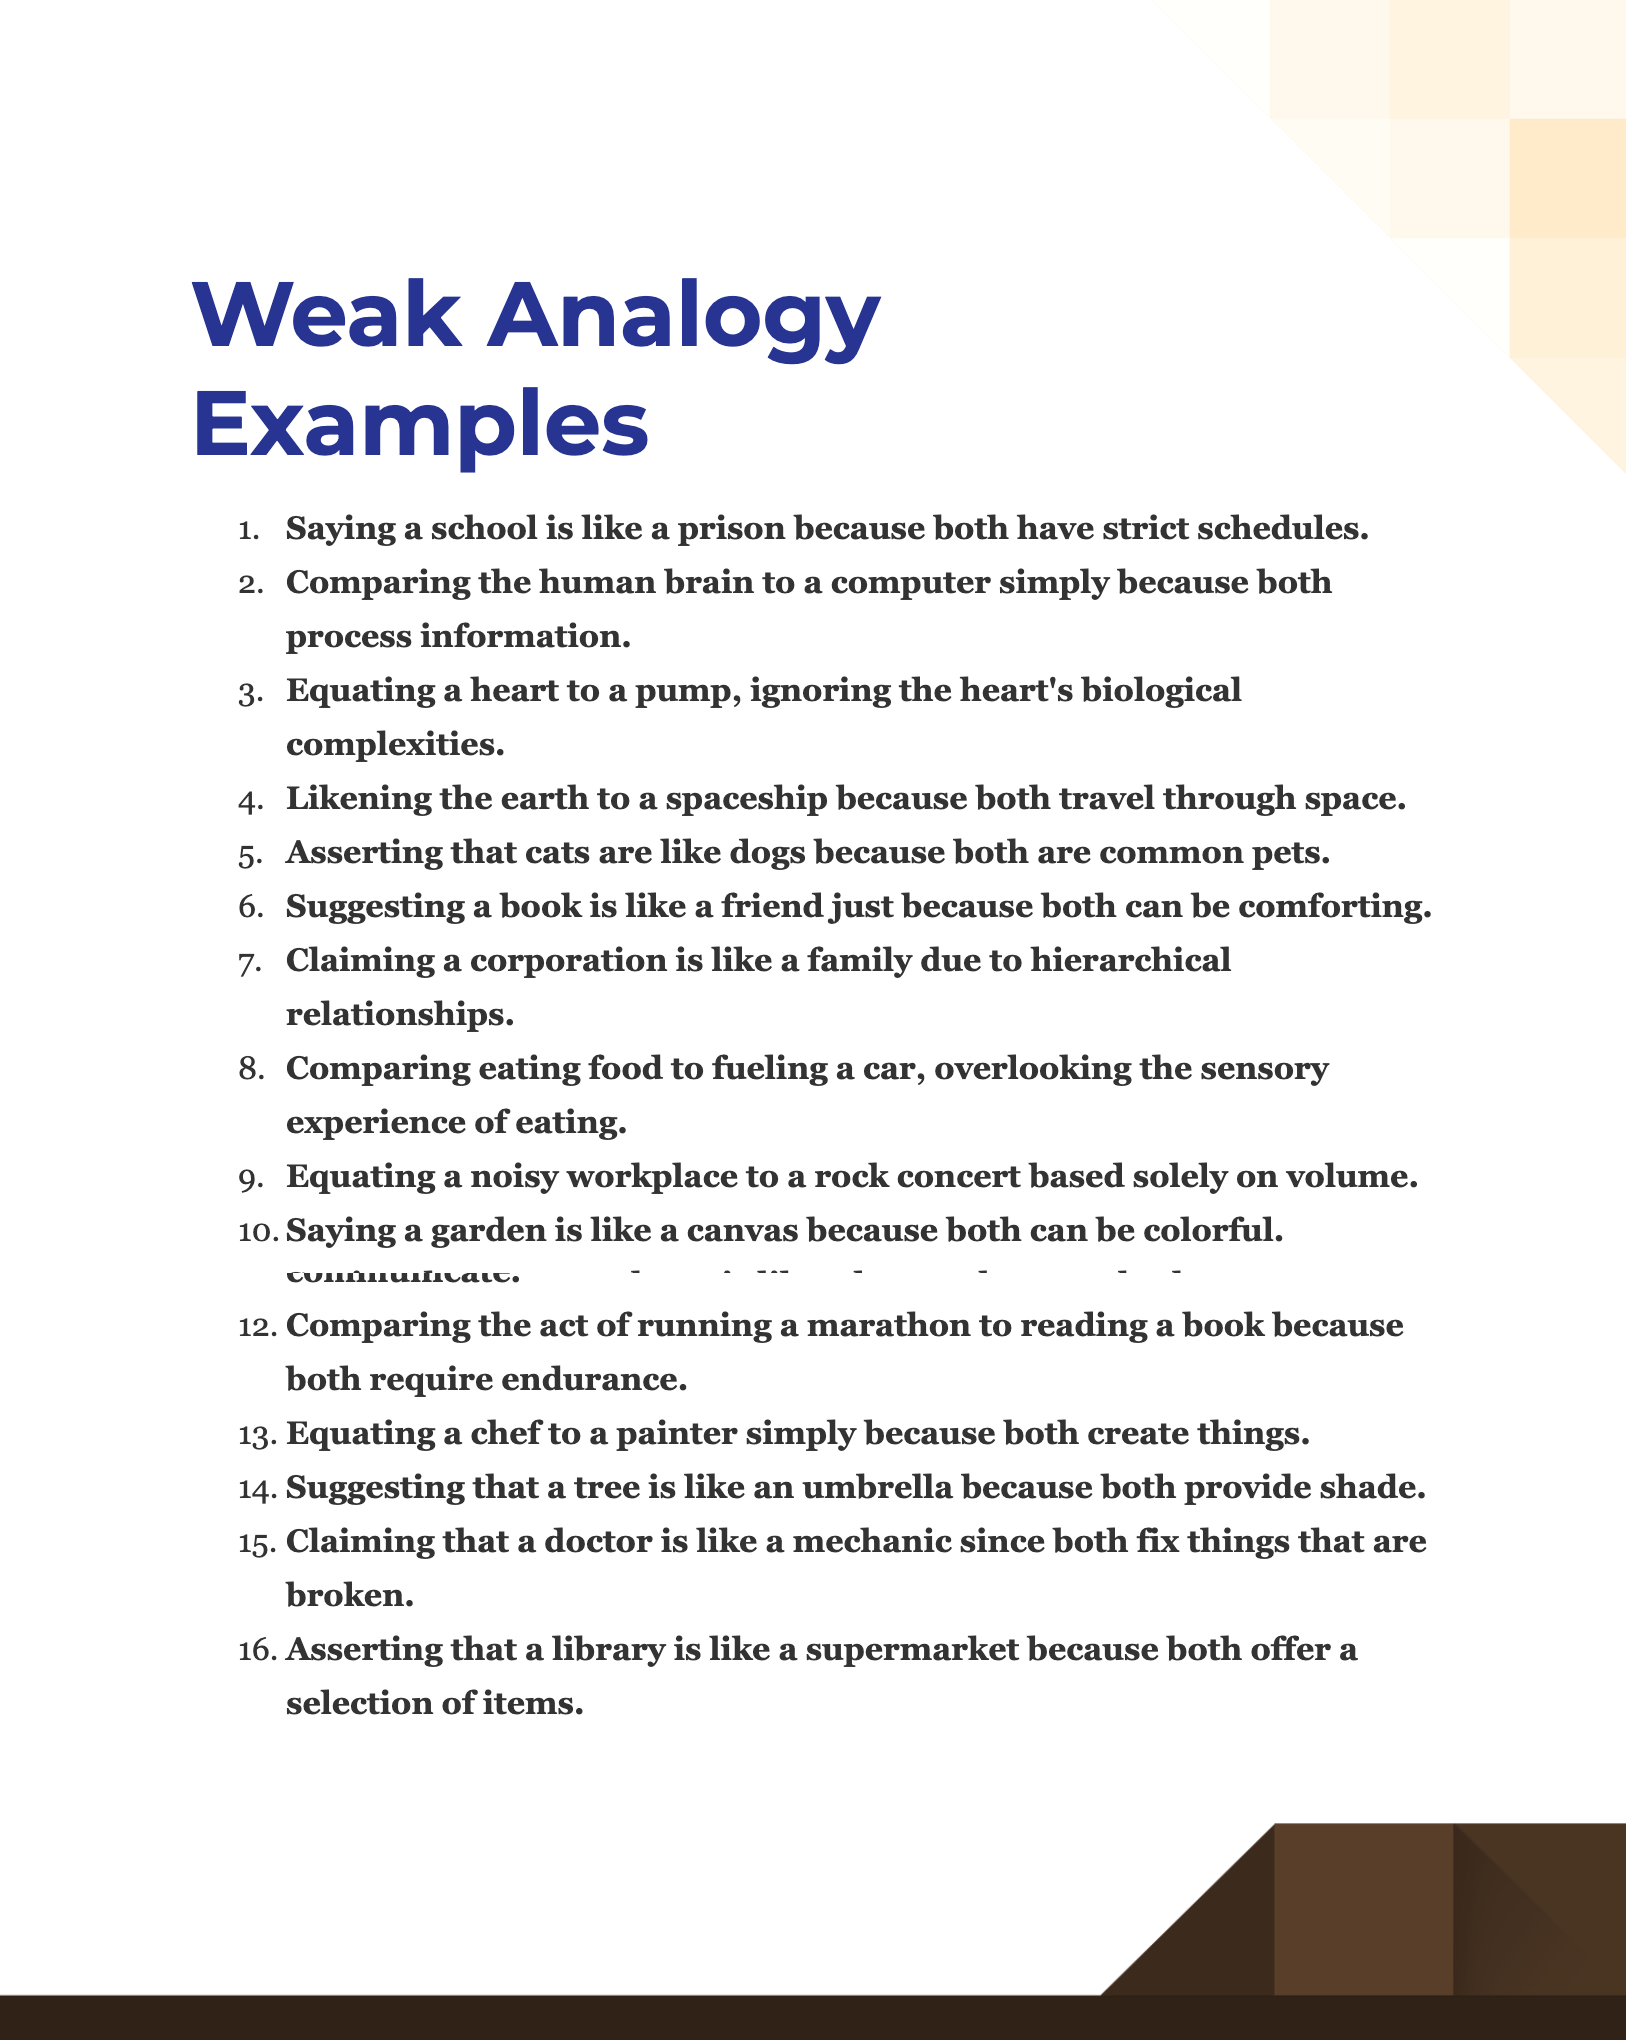 Weak Analogy Examples